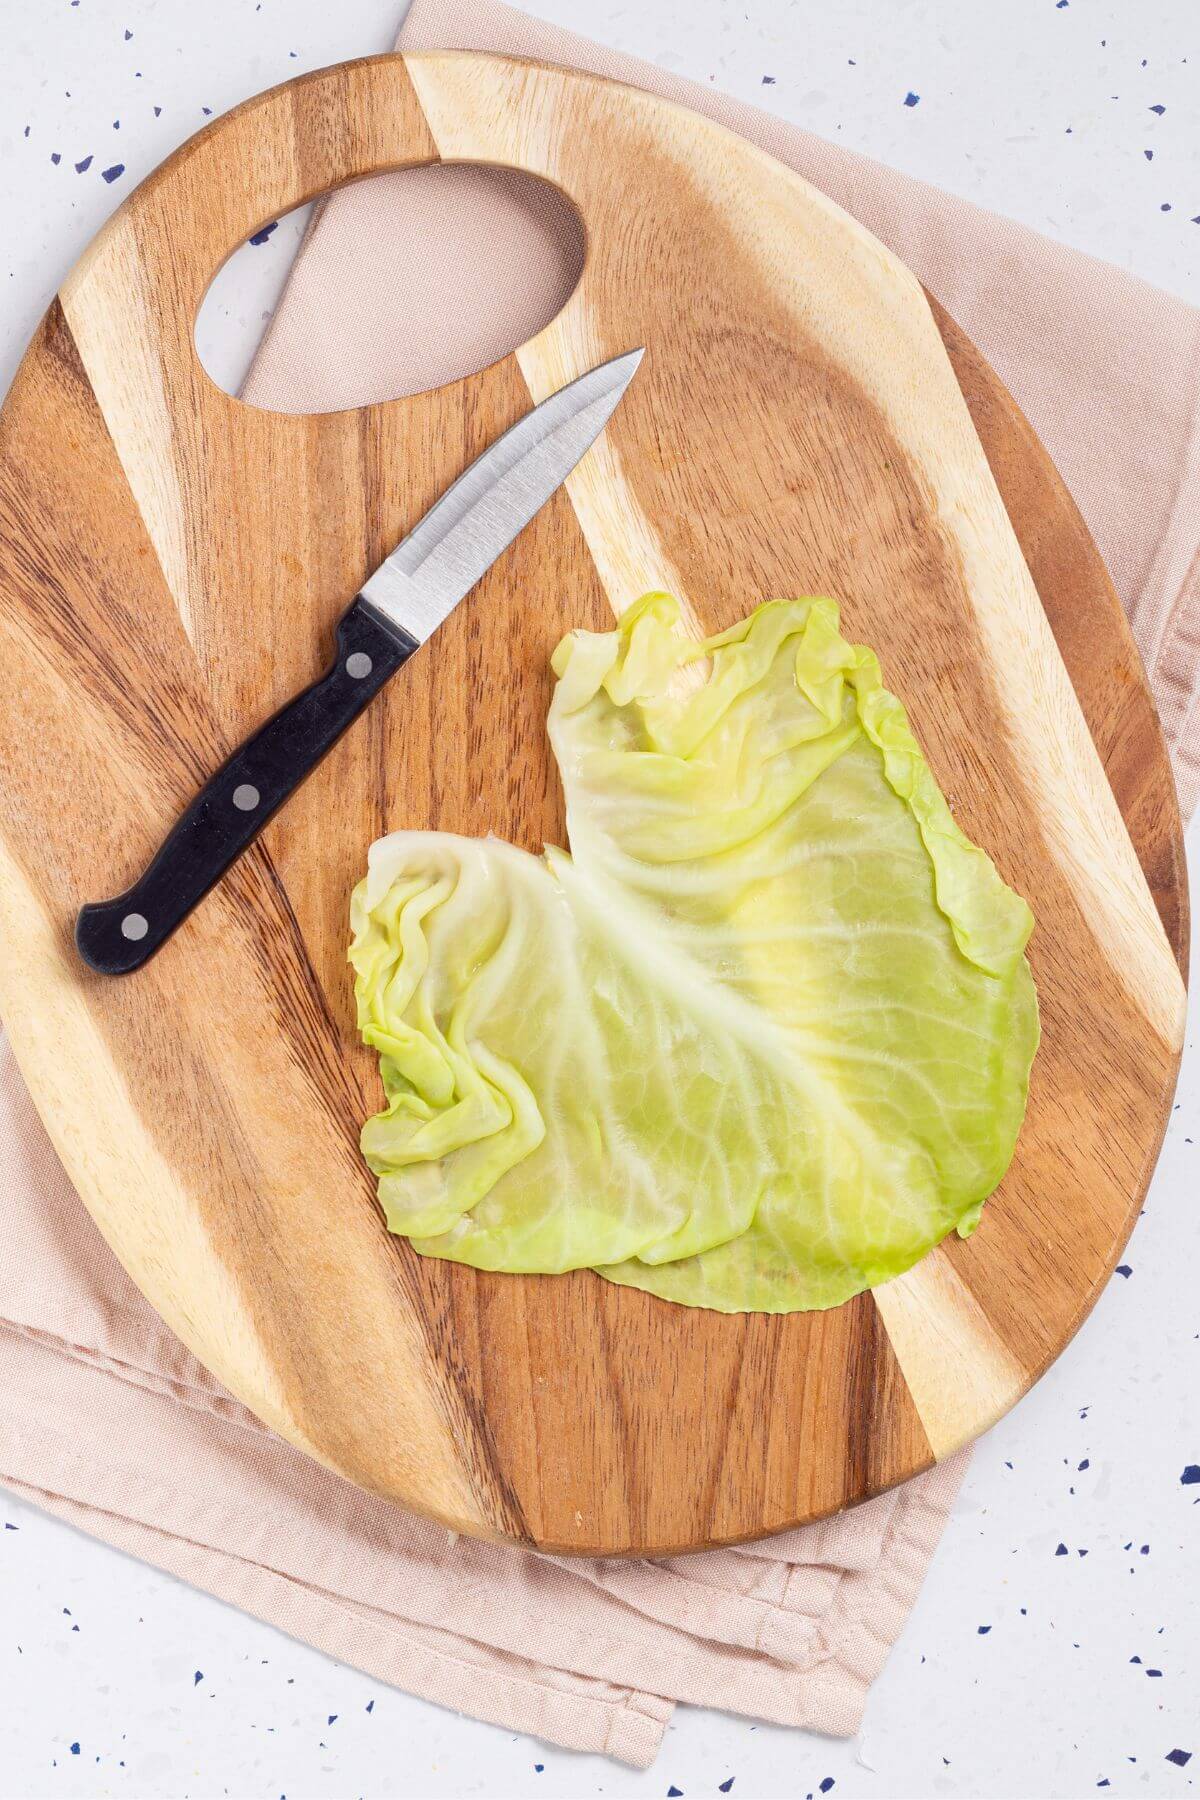 Prepared cabbage leaf on cutting board.